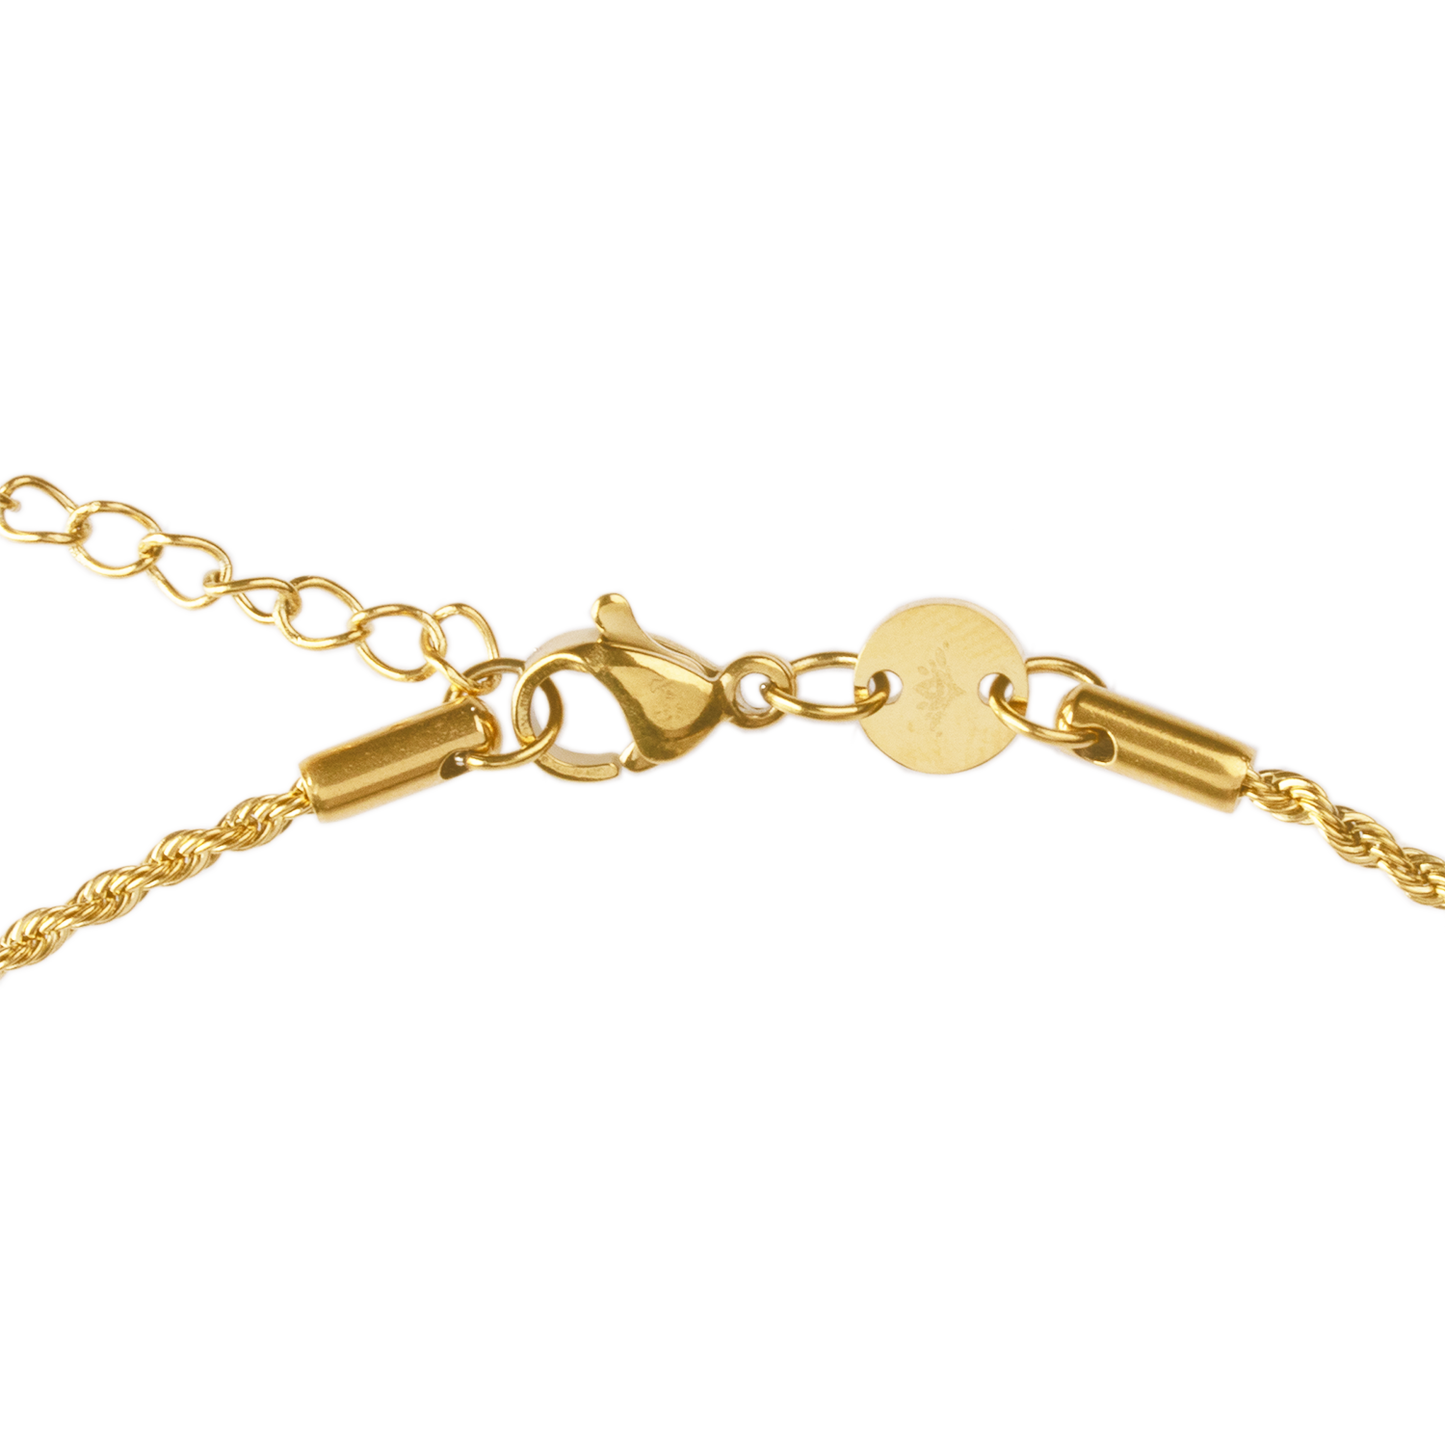 Aquarius / Wassermann Necklace Gold